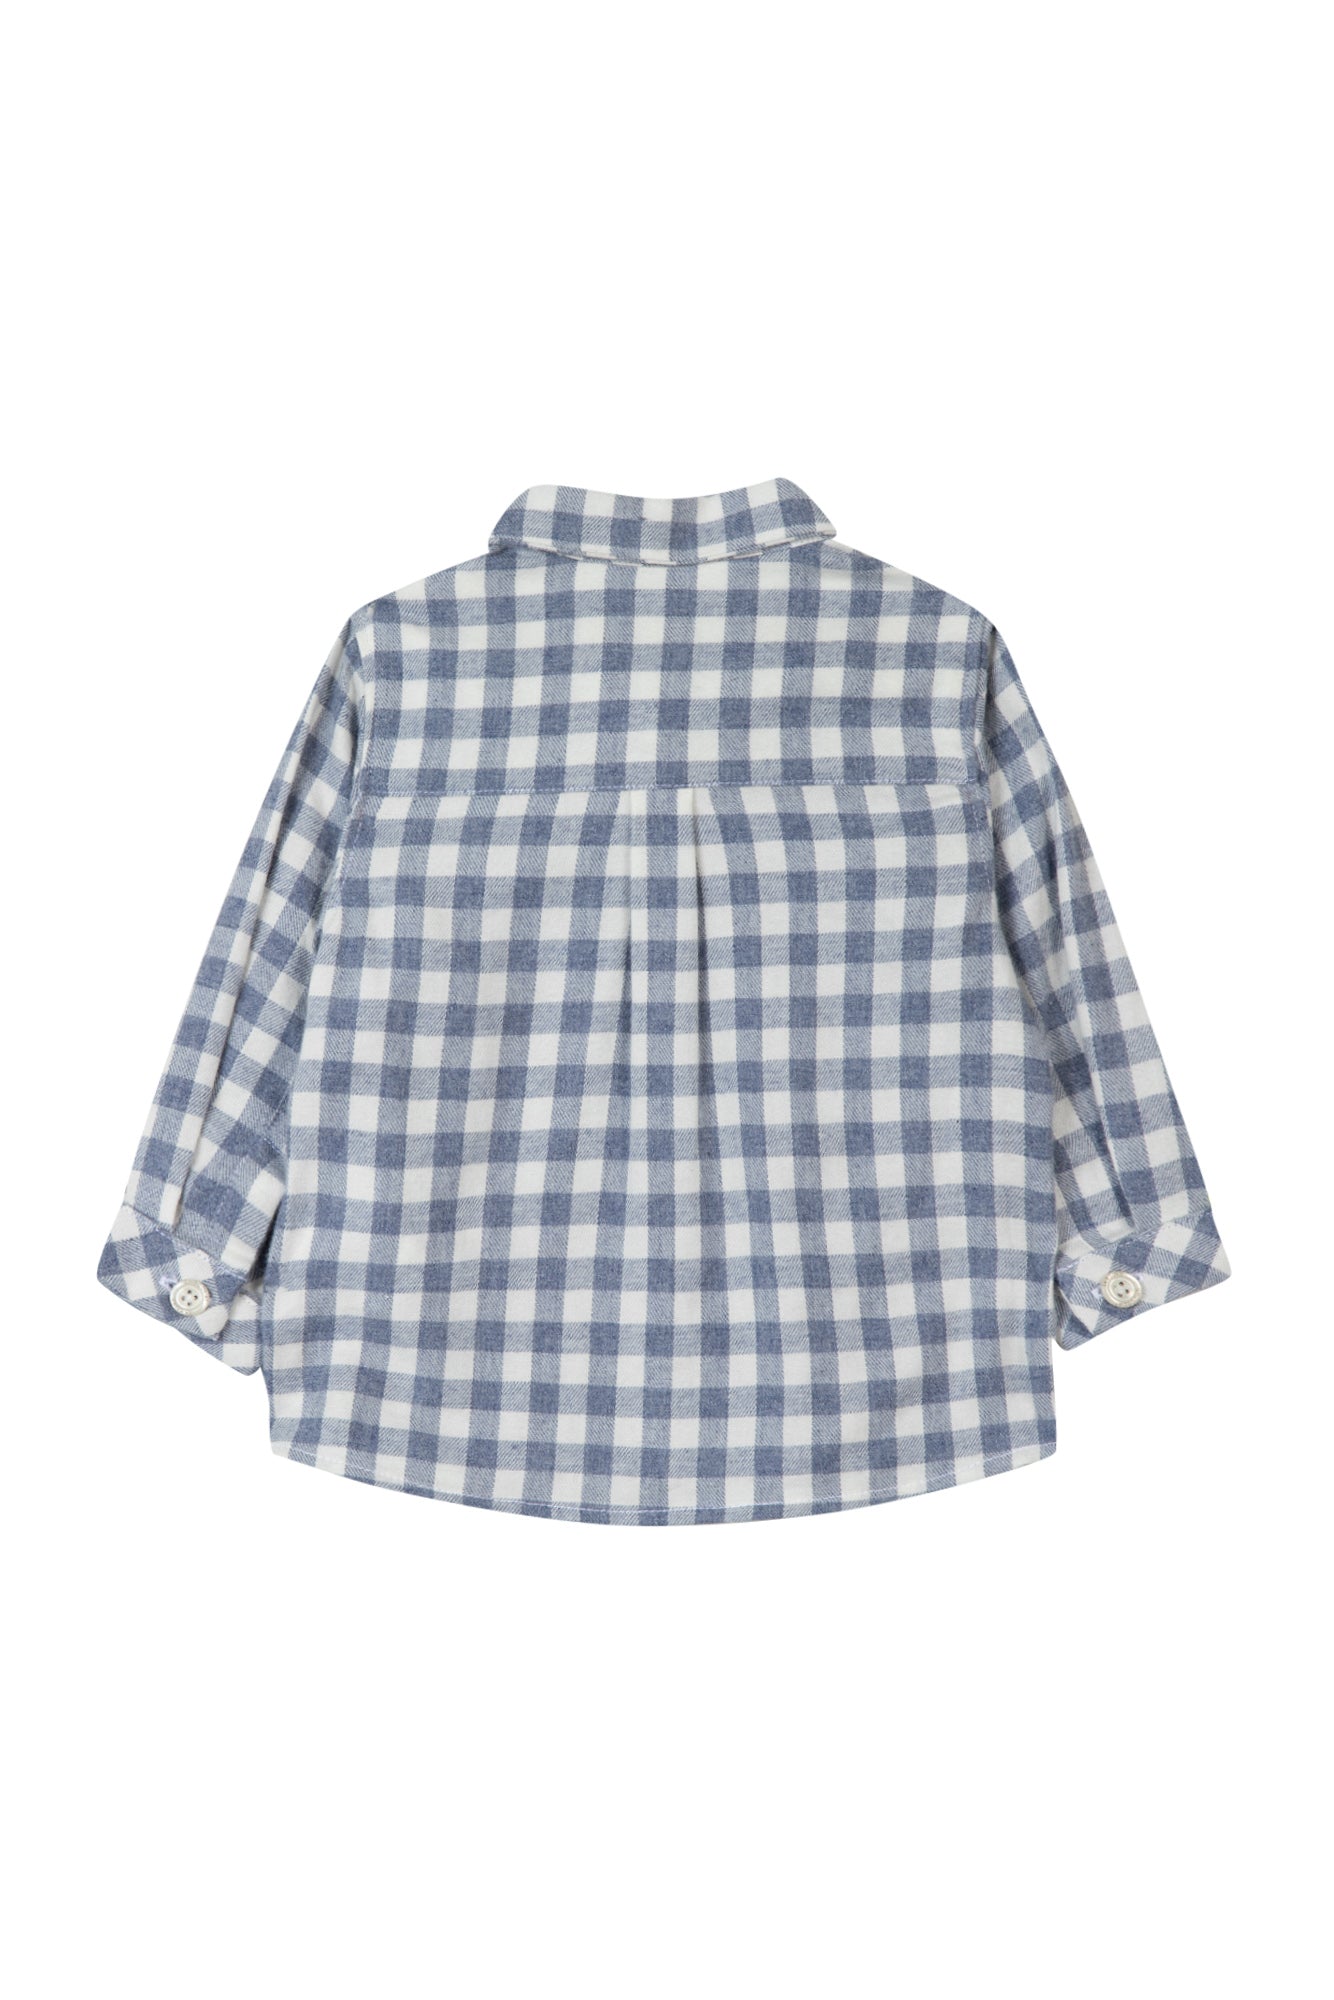 Tartine Boy's LS Flannel Small Check Button Up Shirt